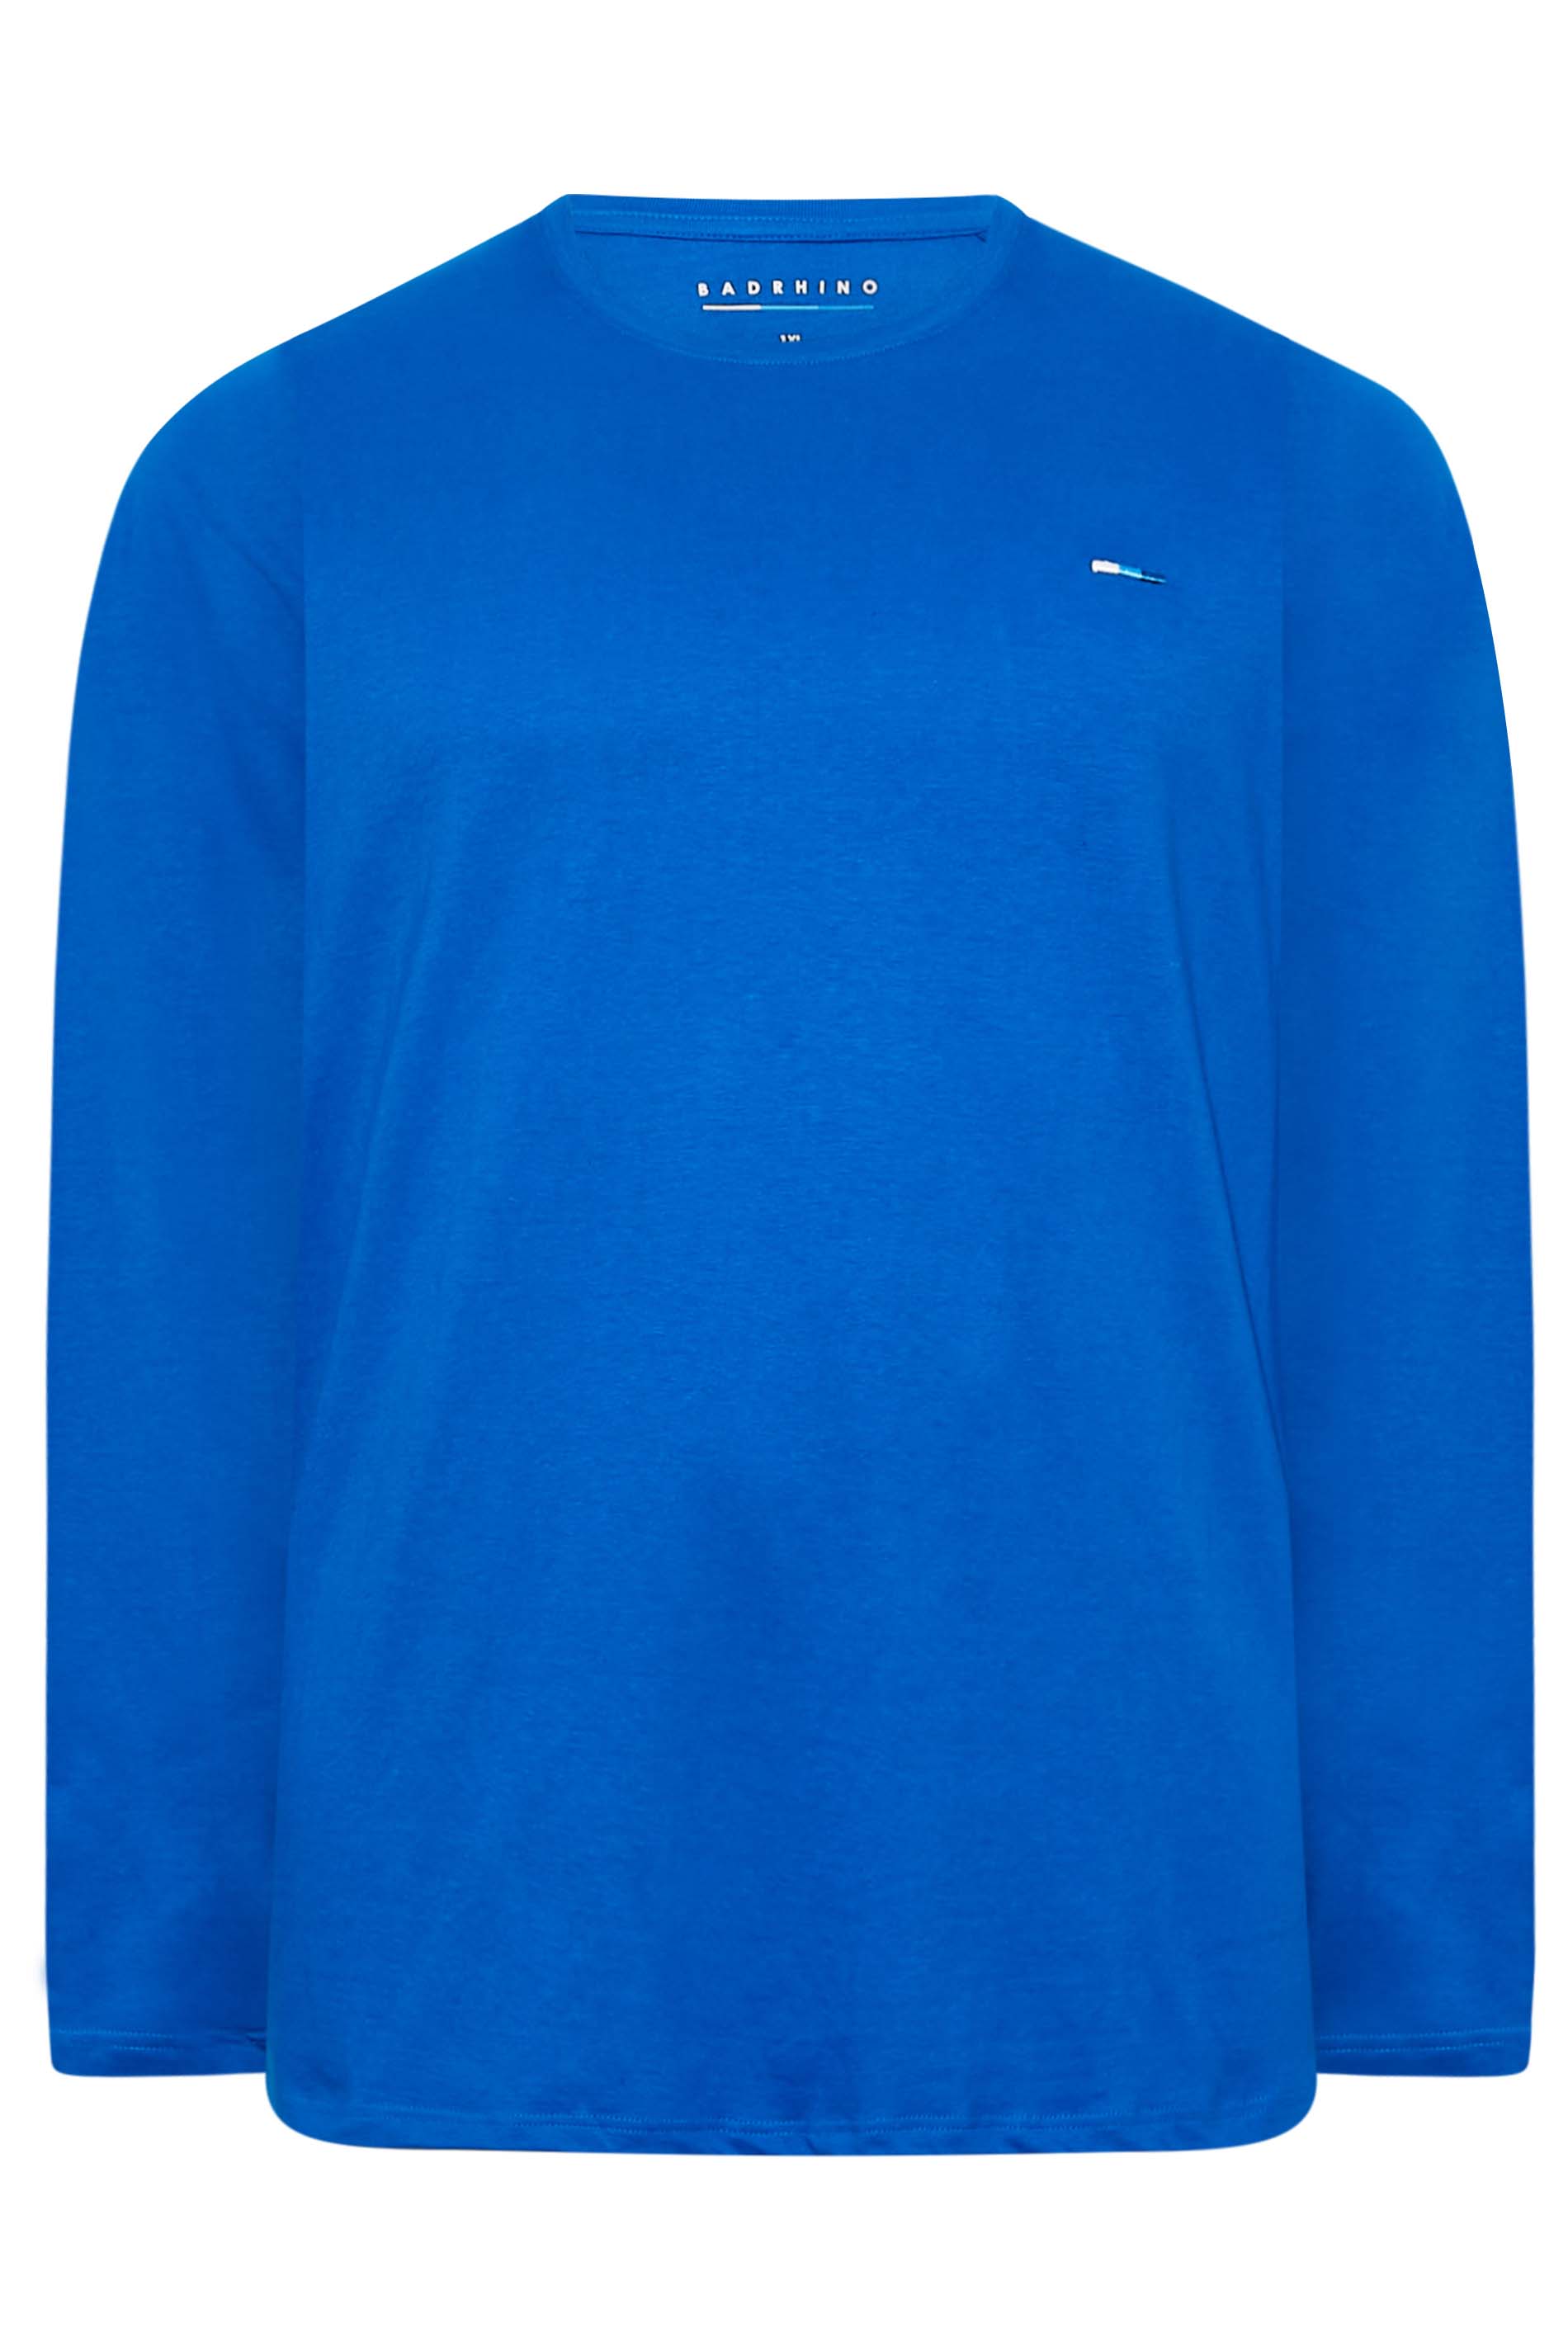 Big & Tall Cobalt Blue Long Sleeve Plain T-shirt | BadRhino 3